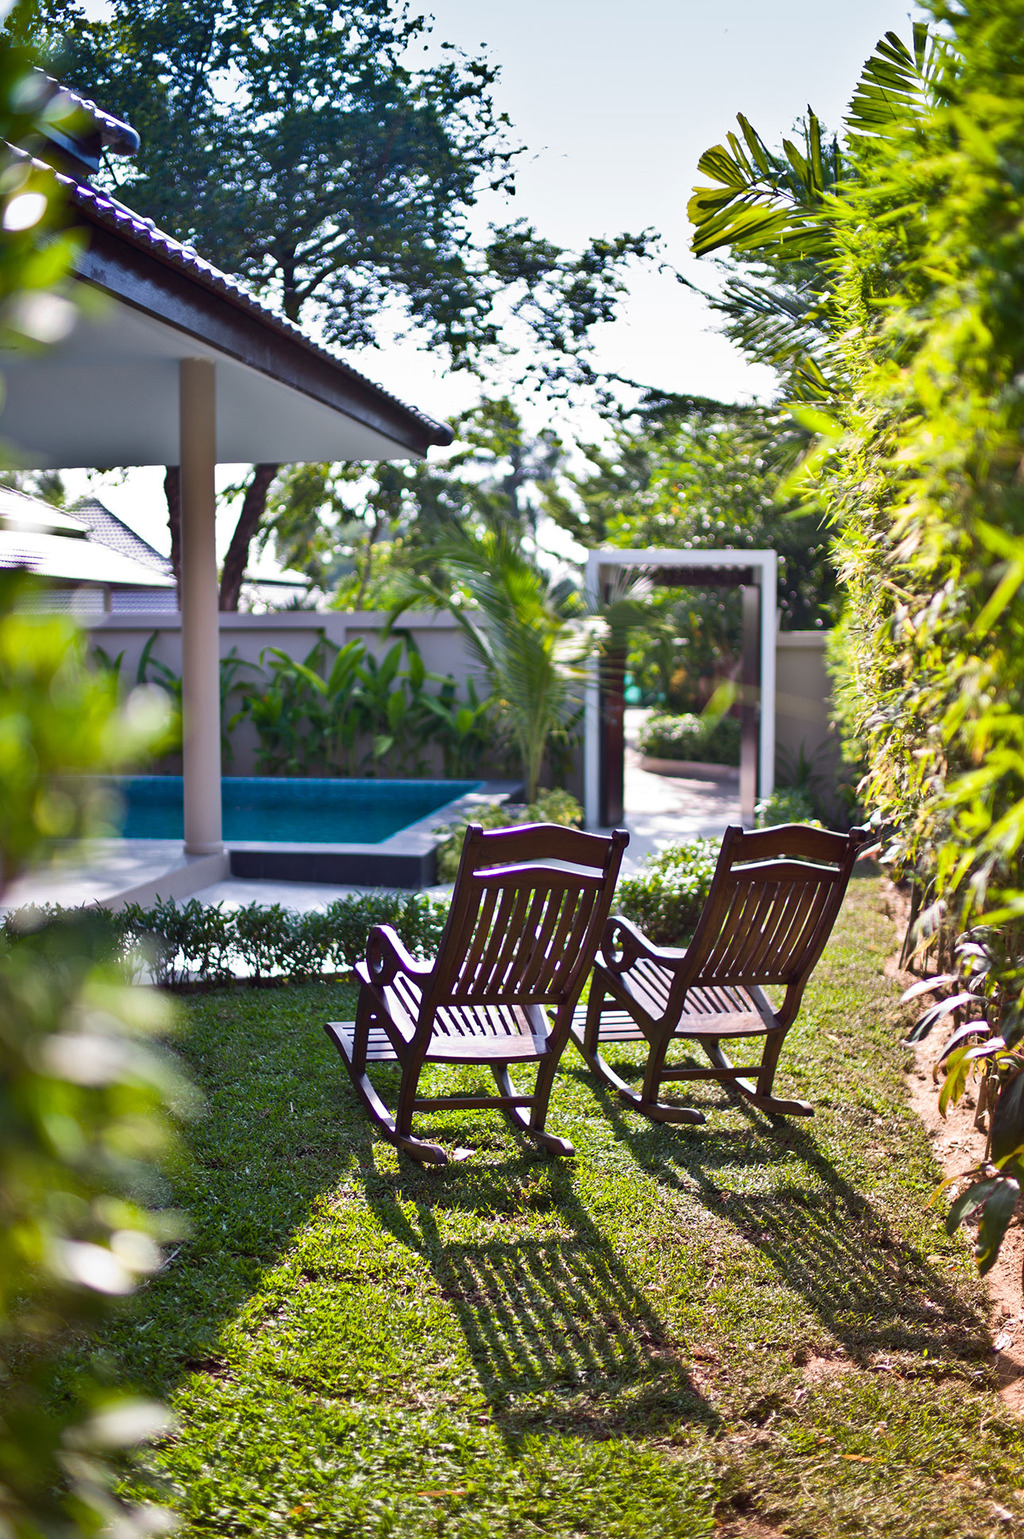 Thai Thani Pool Villa Resort